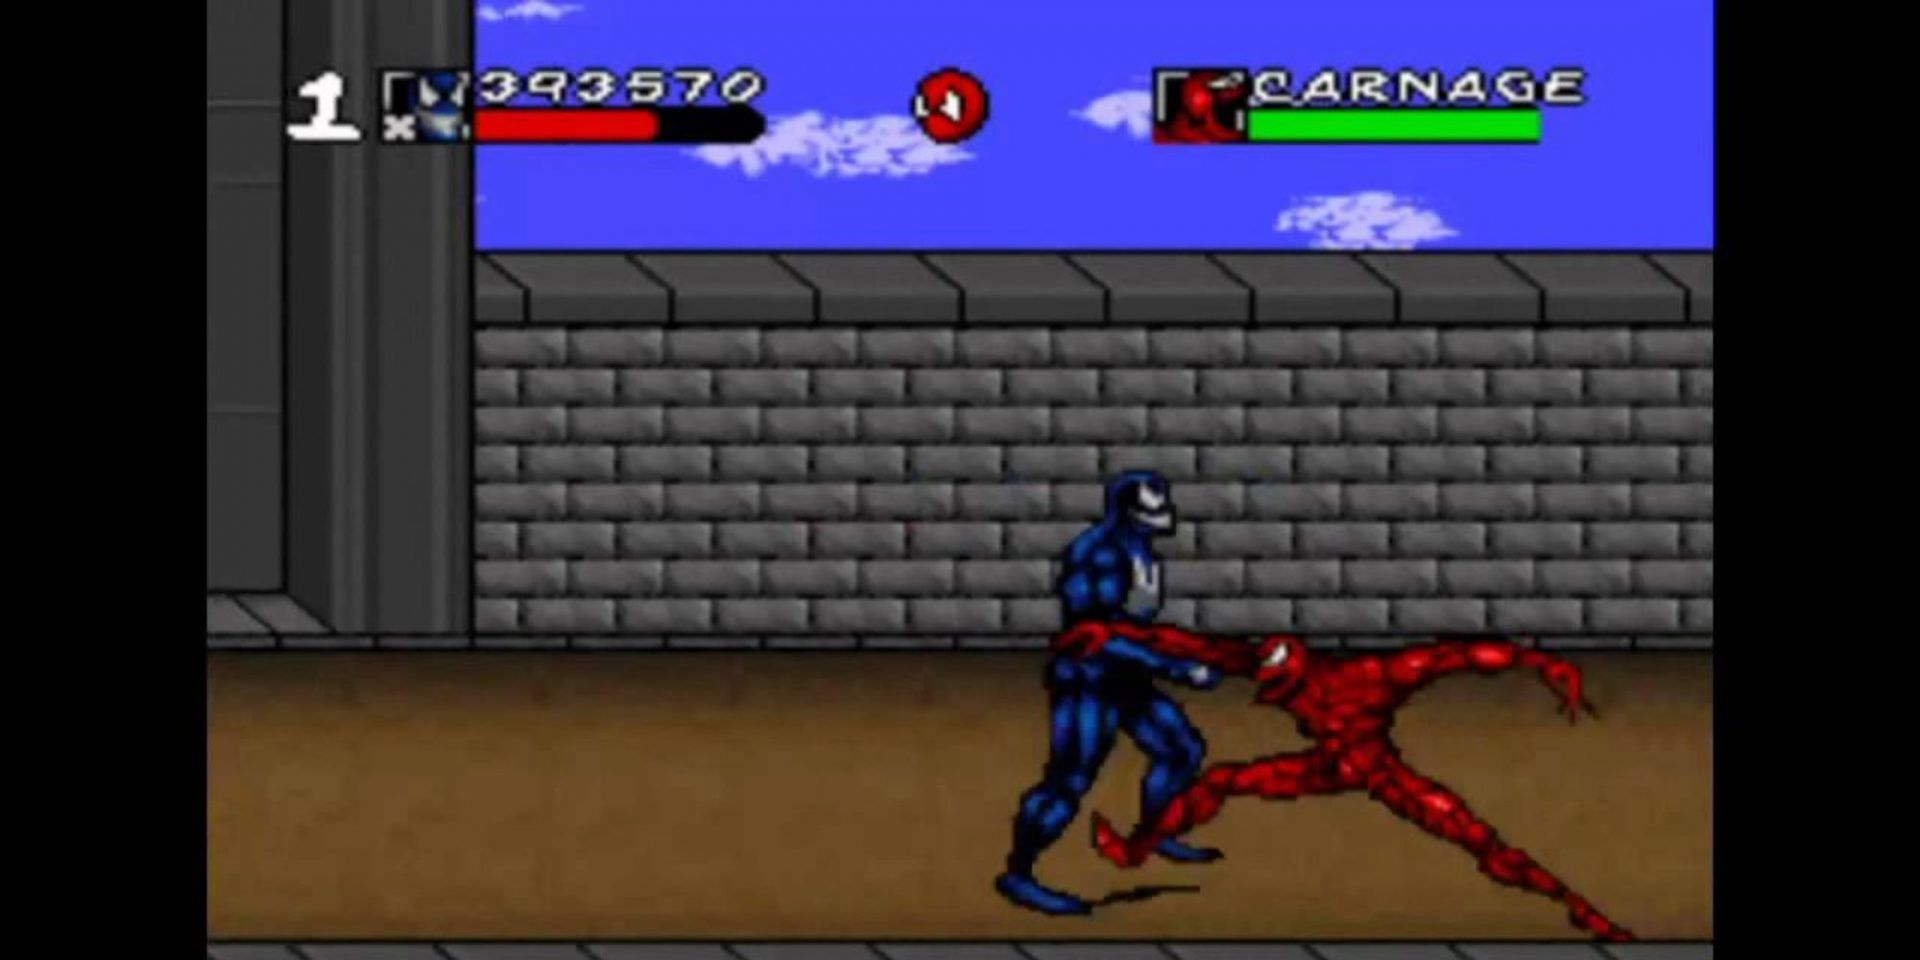 Carnage takes a shot at Venom as he walks towards him